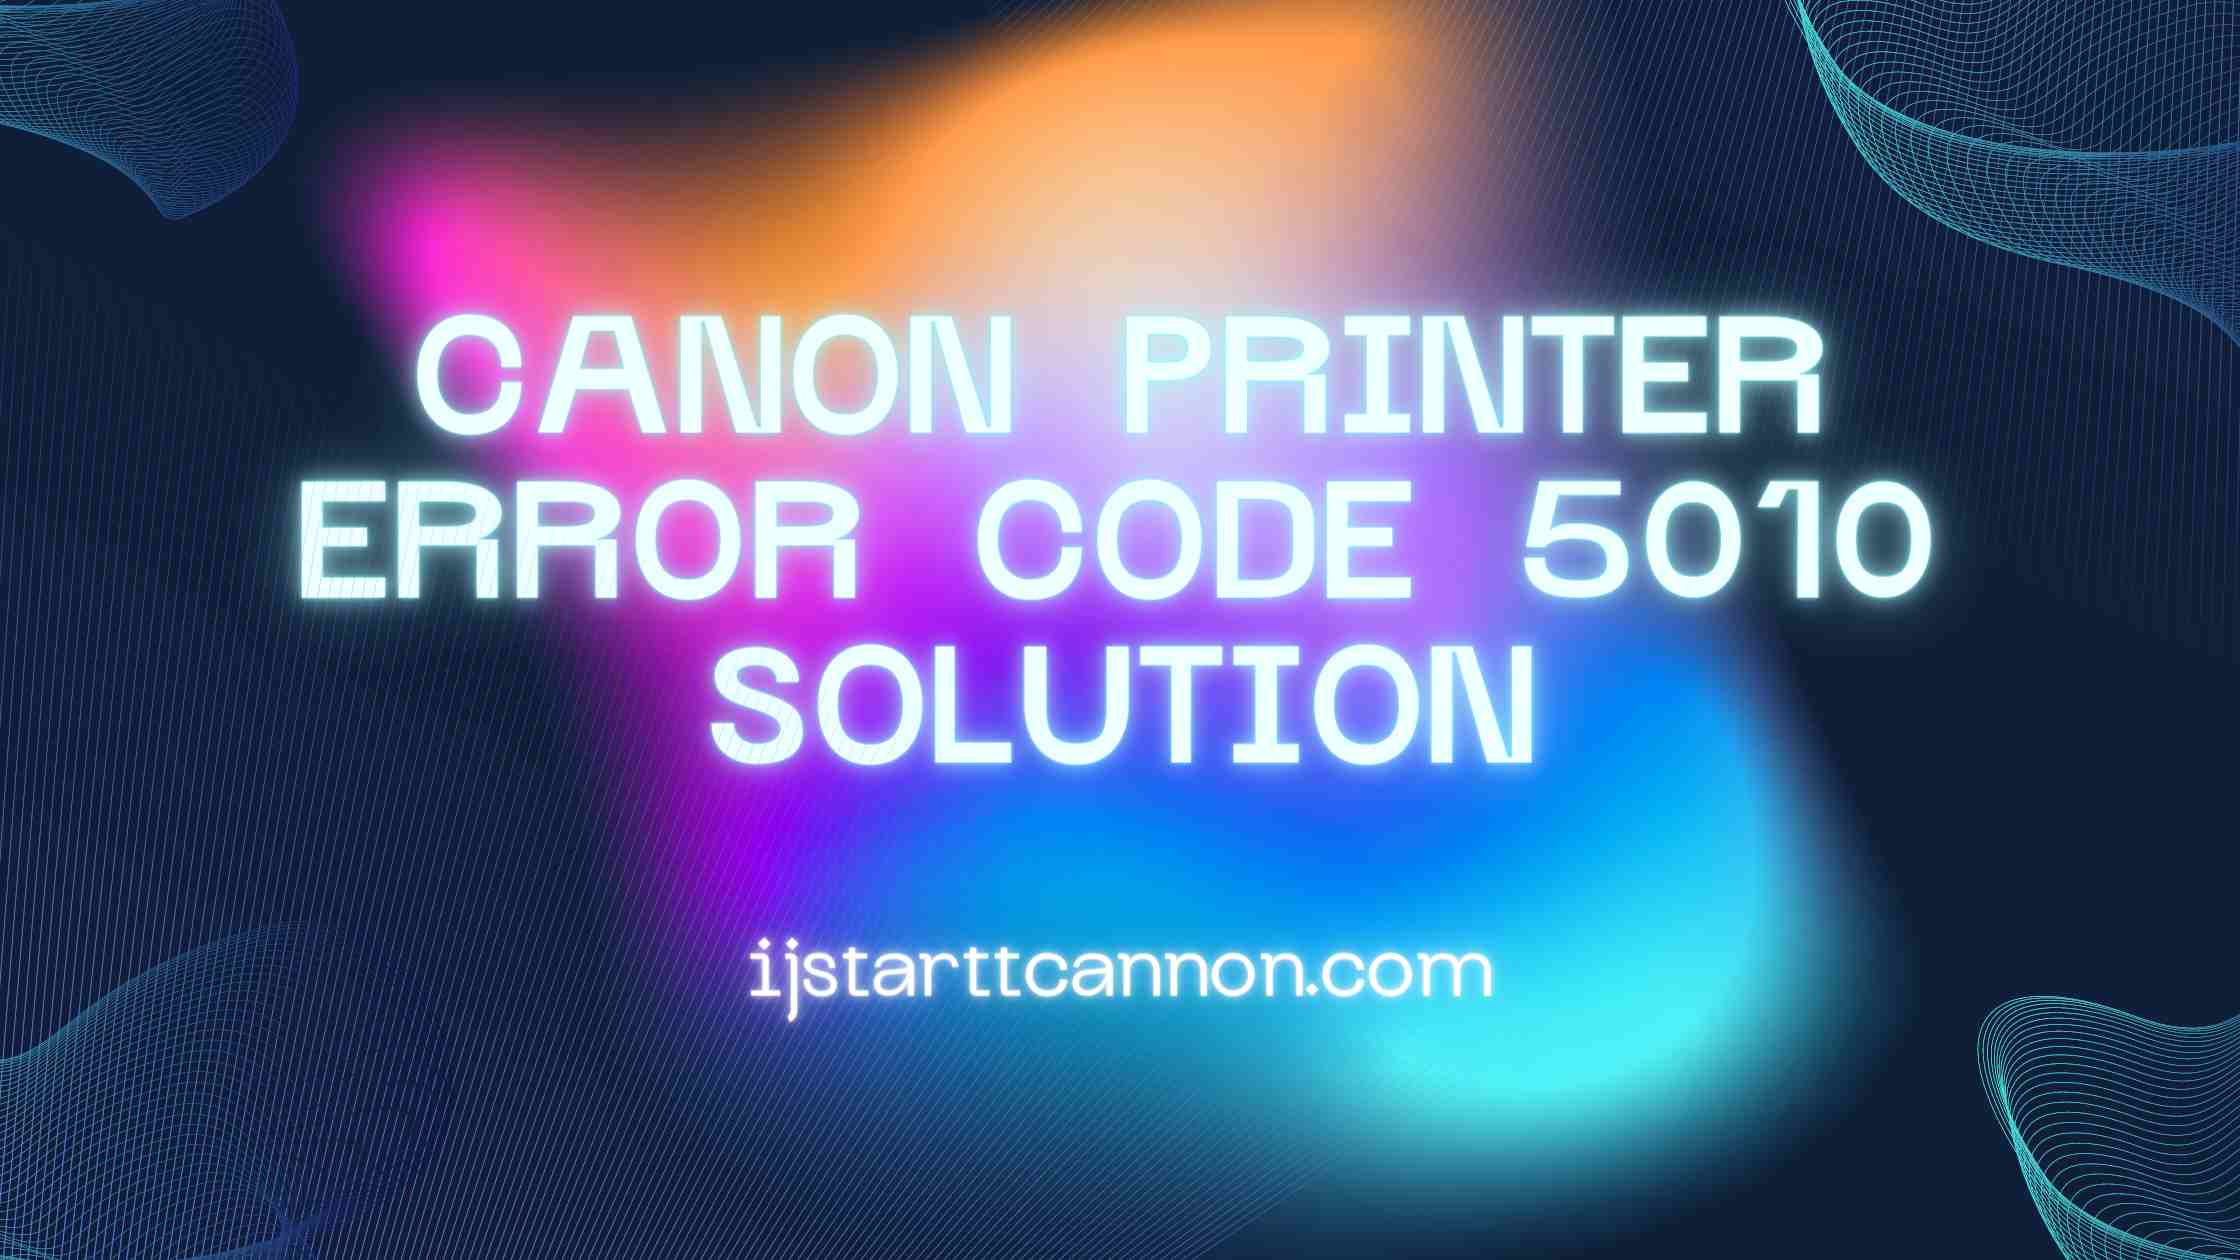 Solution for Canon Printer Error Code 5010